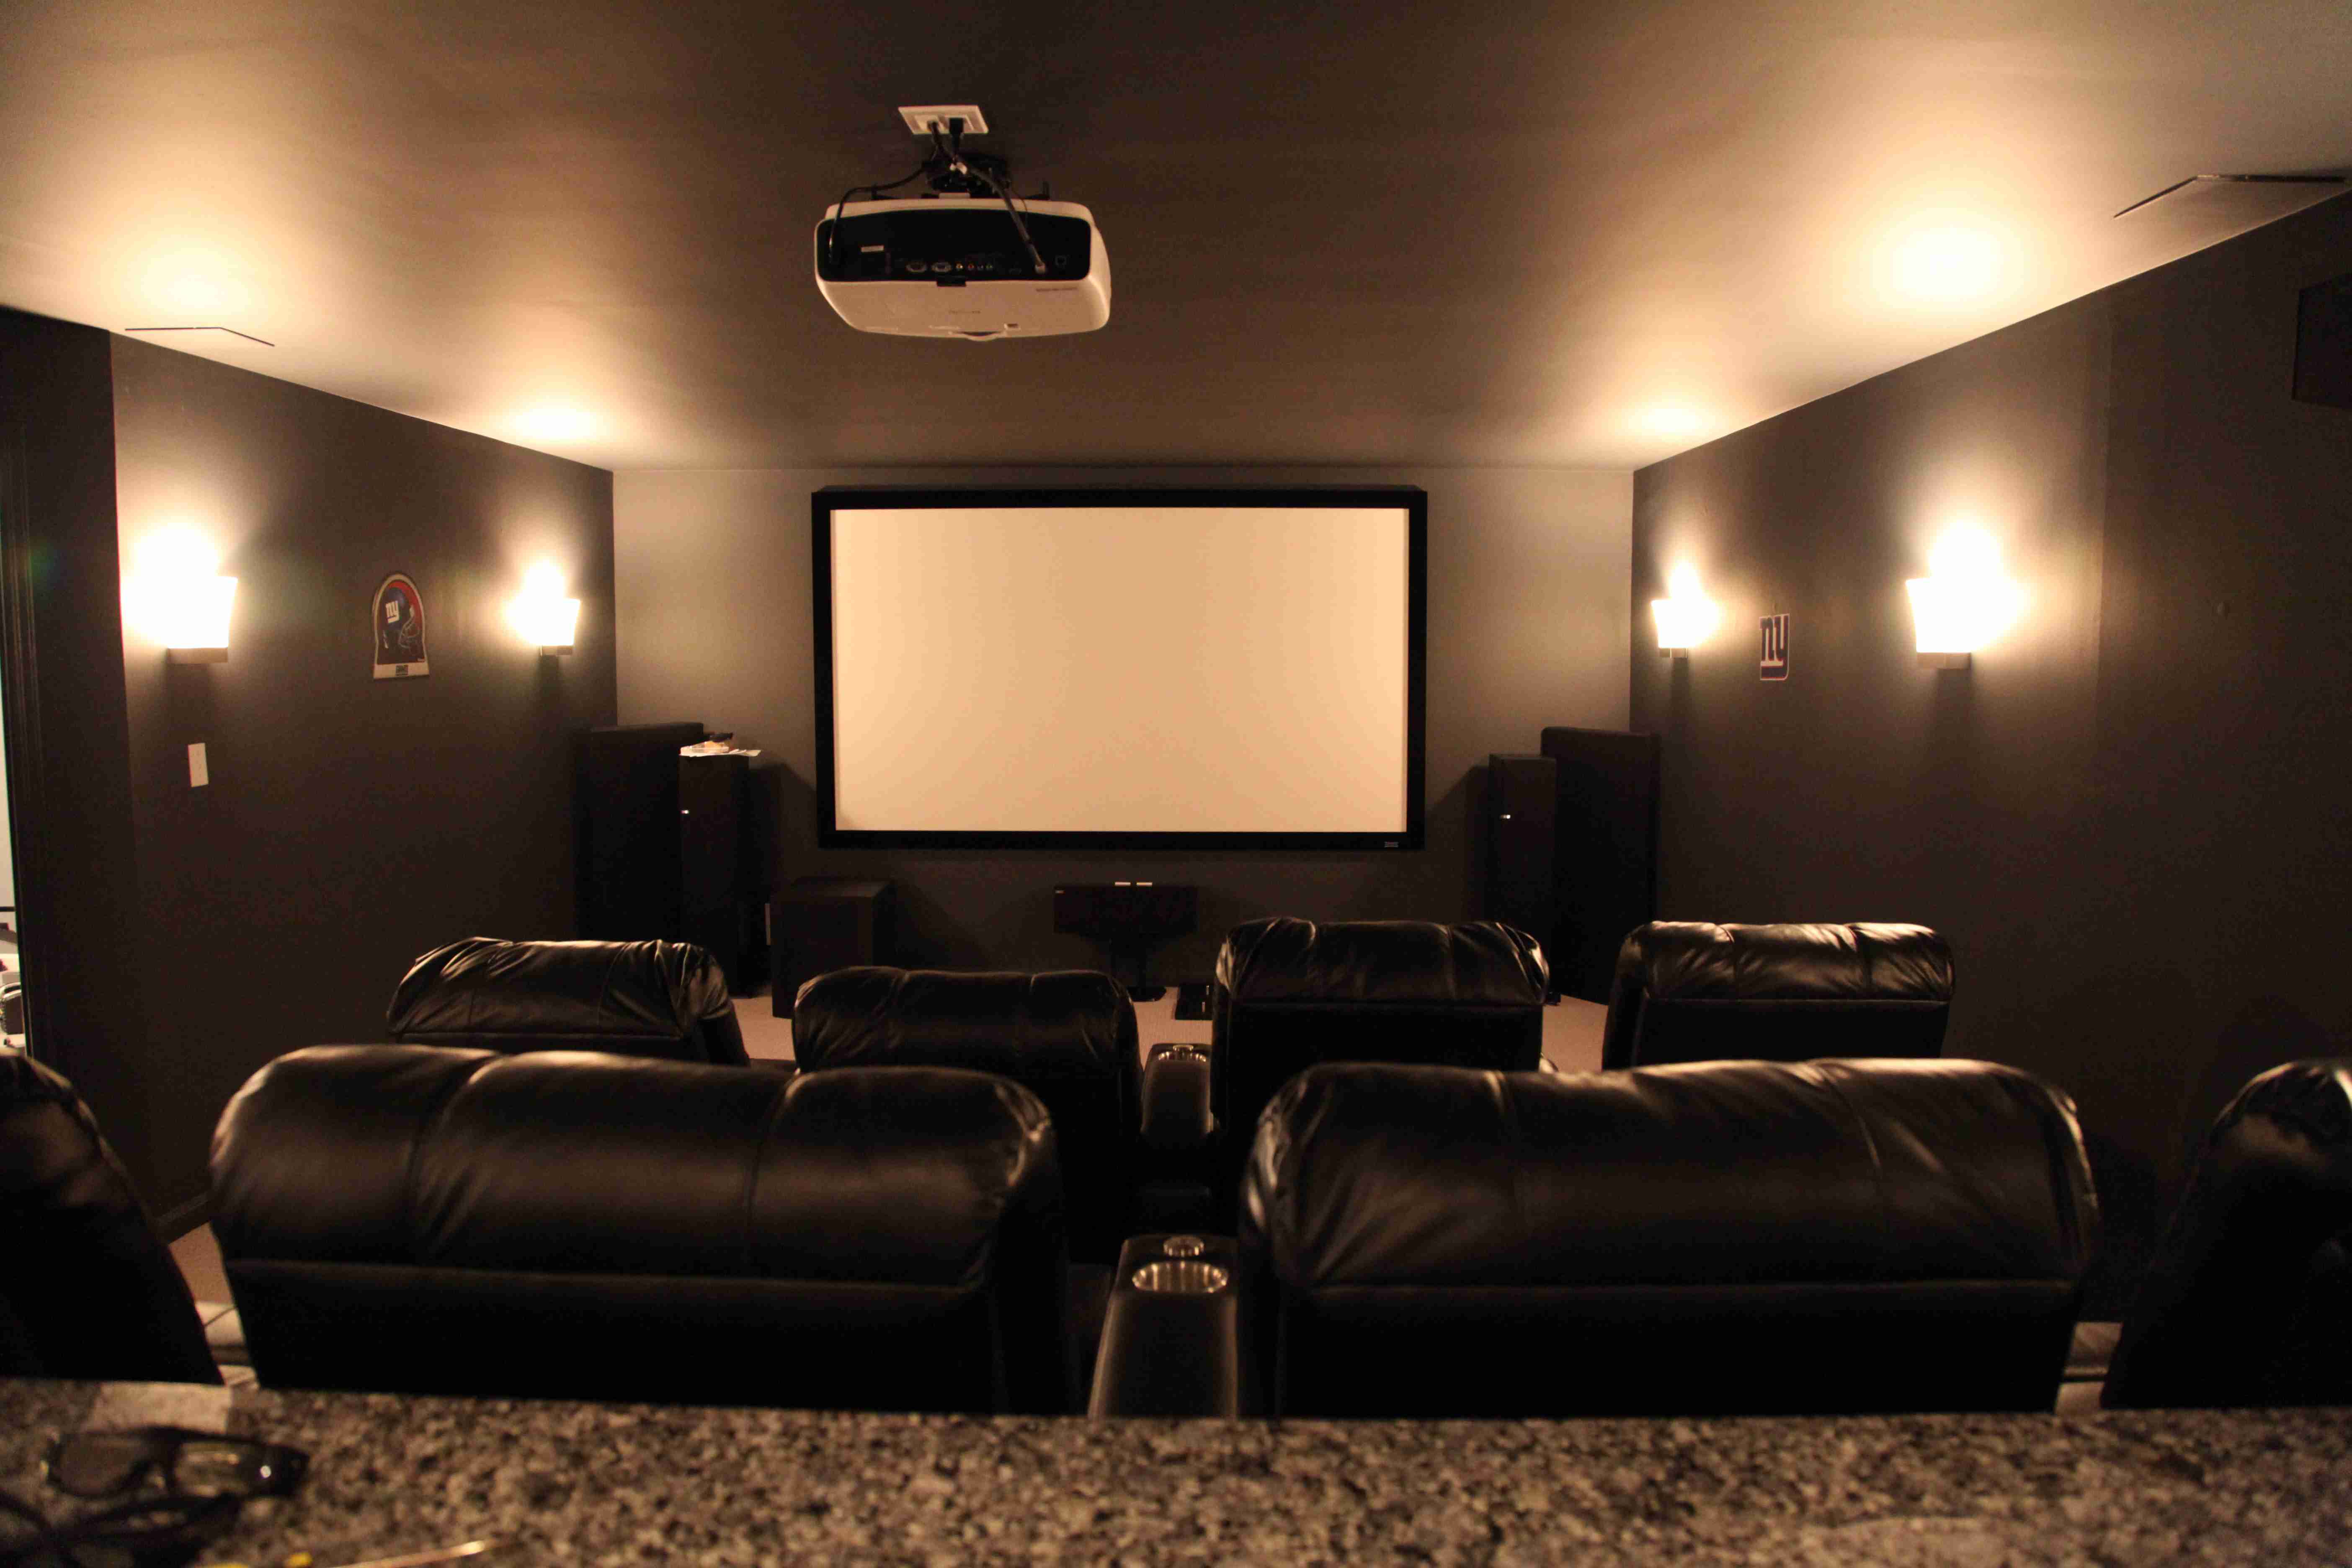 mediaroom with projector